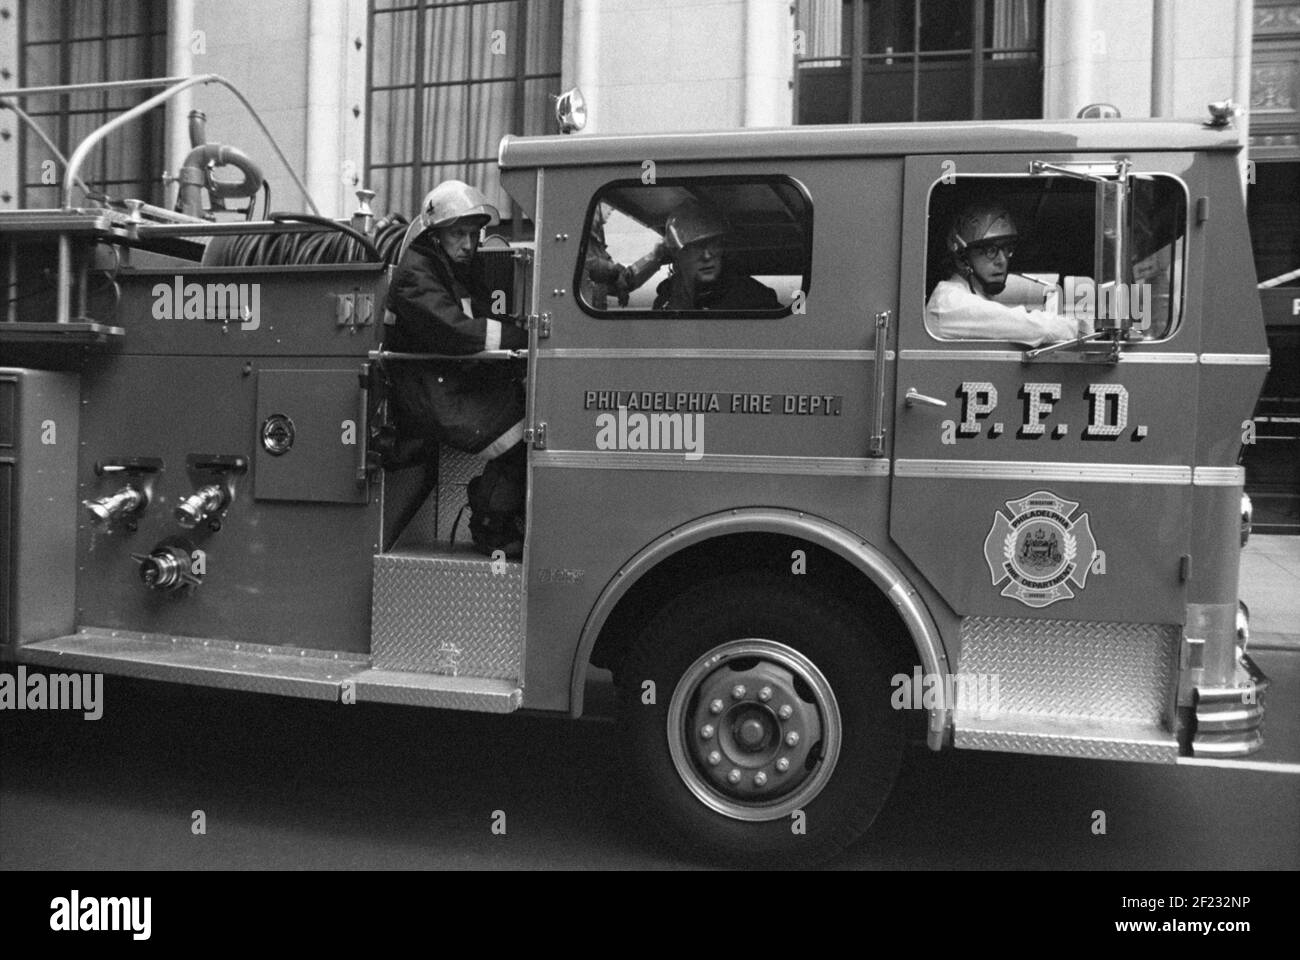 Fire truck, Philadelphia fire department, Philadelphia PA.,USA ,1976 Stock Photo